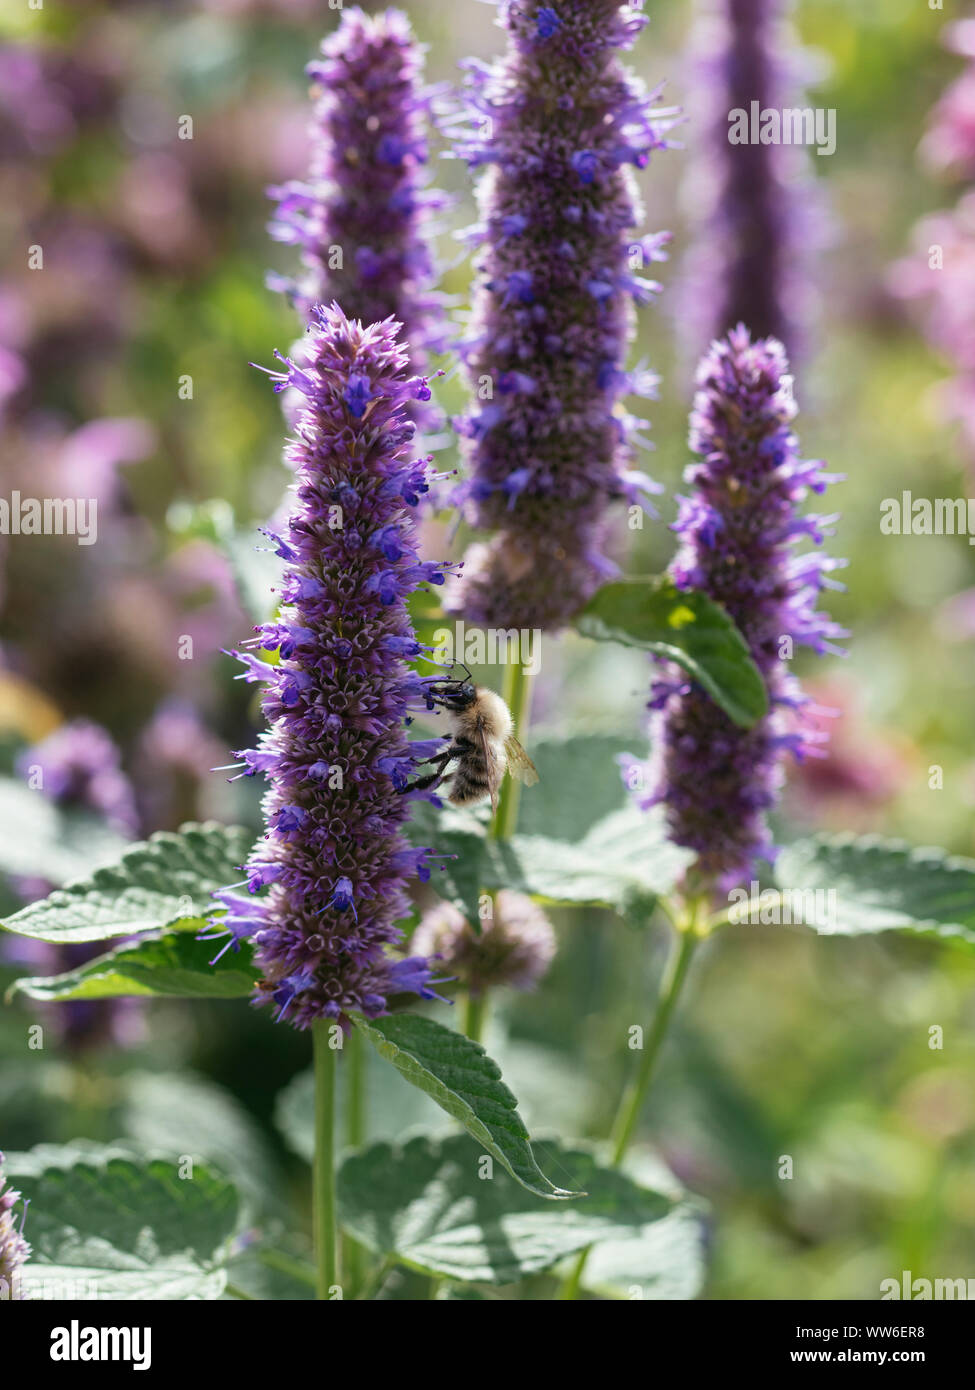 Bumble bee feeding on anise hyssop (Agastache foeniculum) flowers. Stock Photo